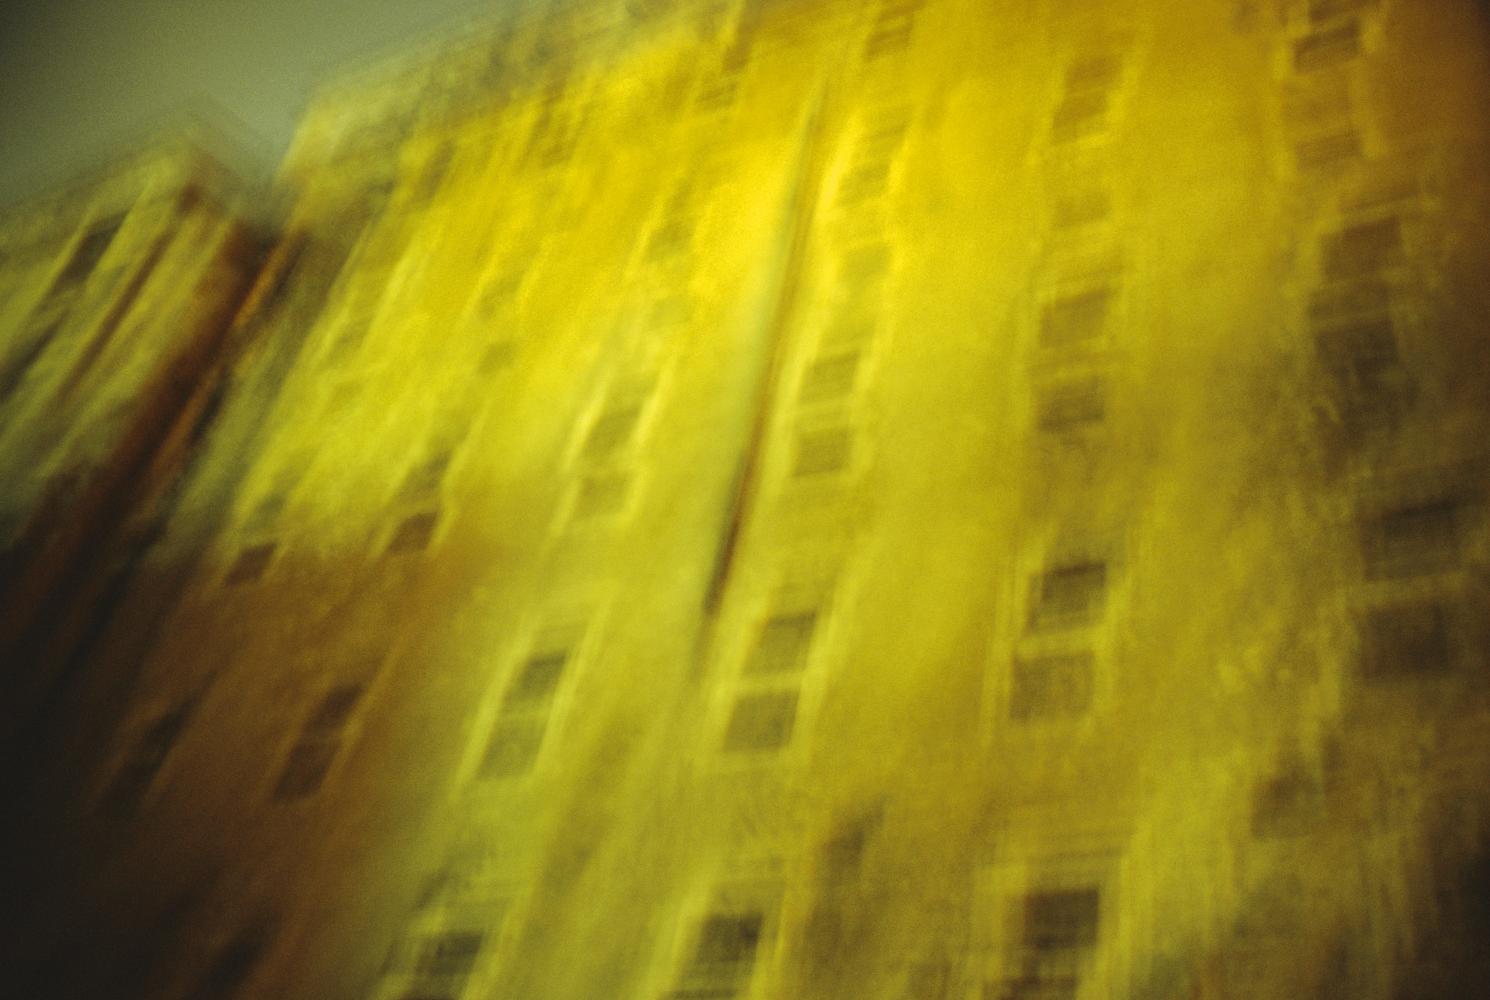 Nan Goldin "Falling buildings, Rome", 2004